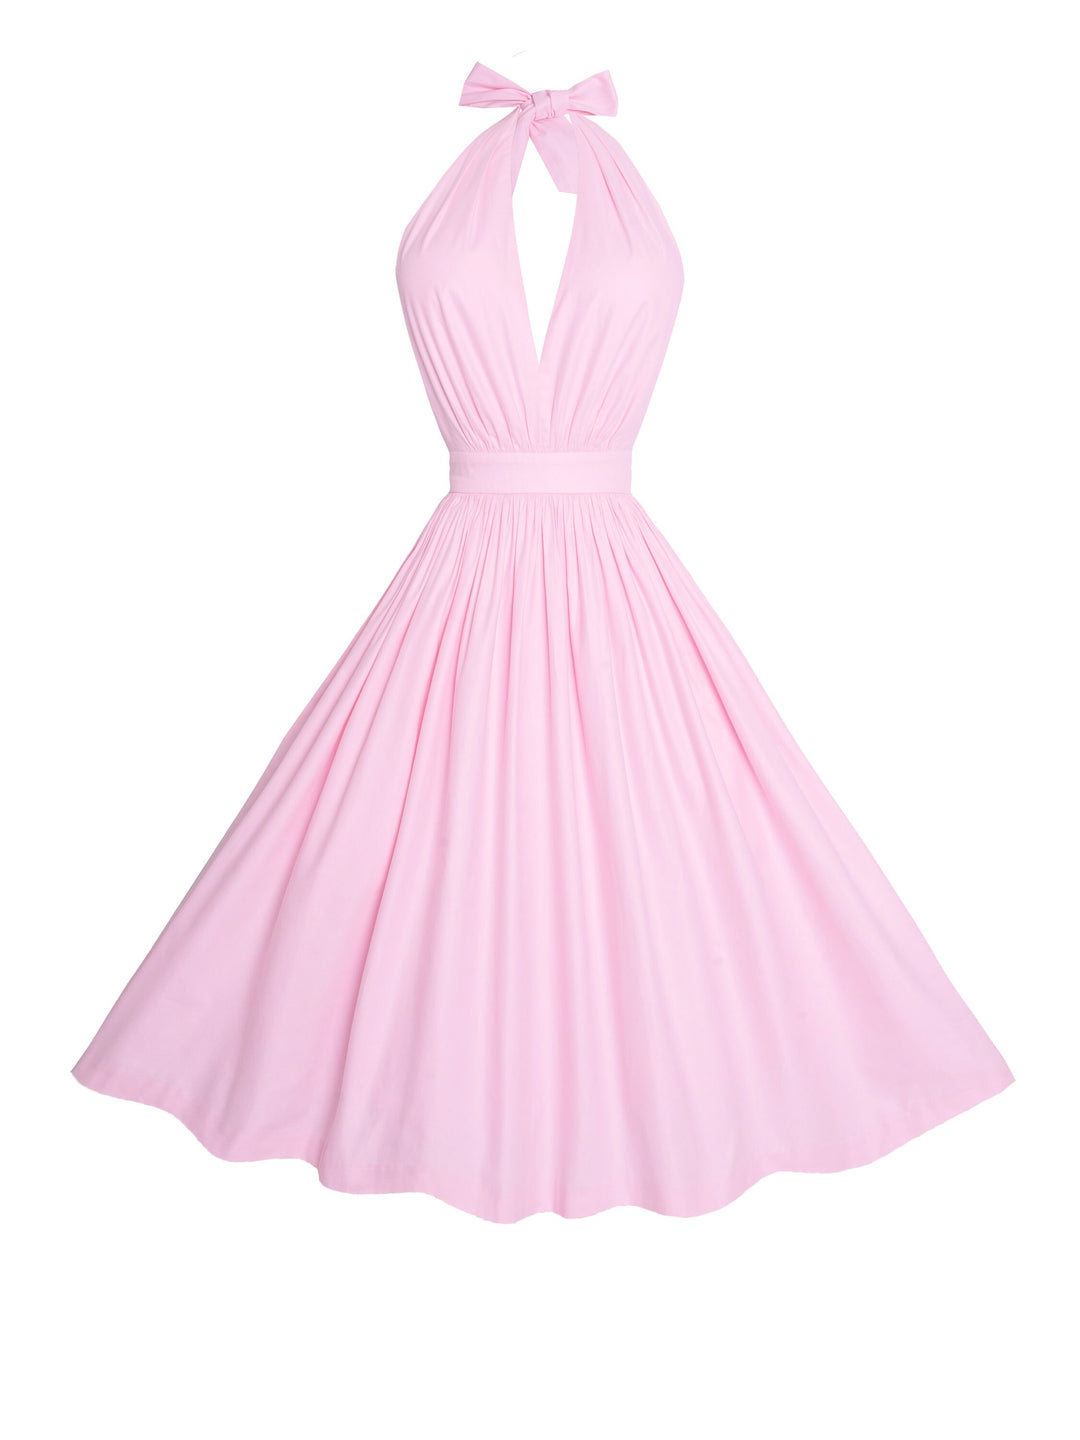 MTO - Charlotte Dress in Ballerina Pink Cotton